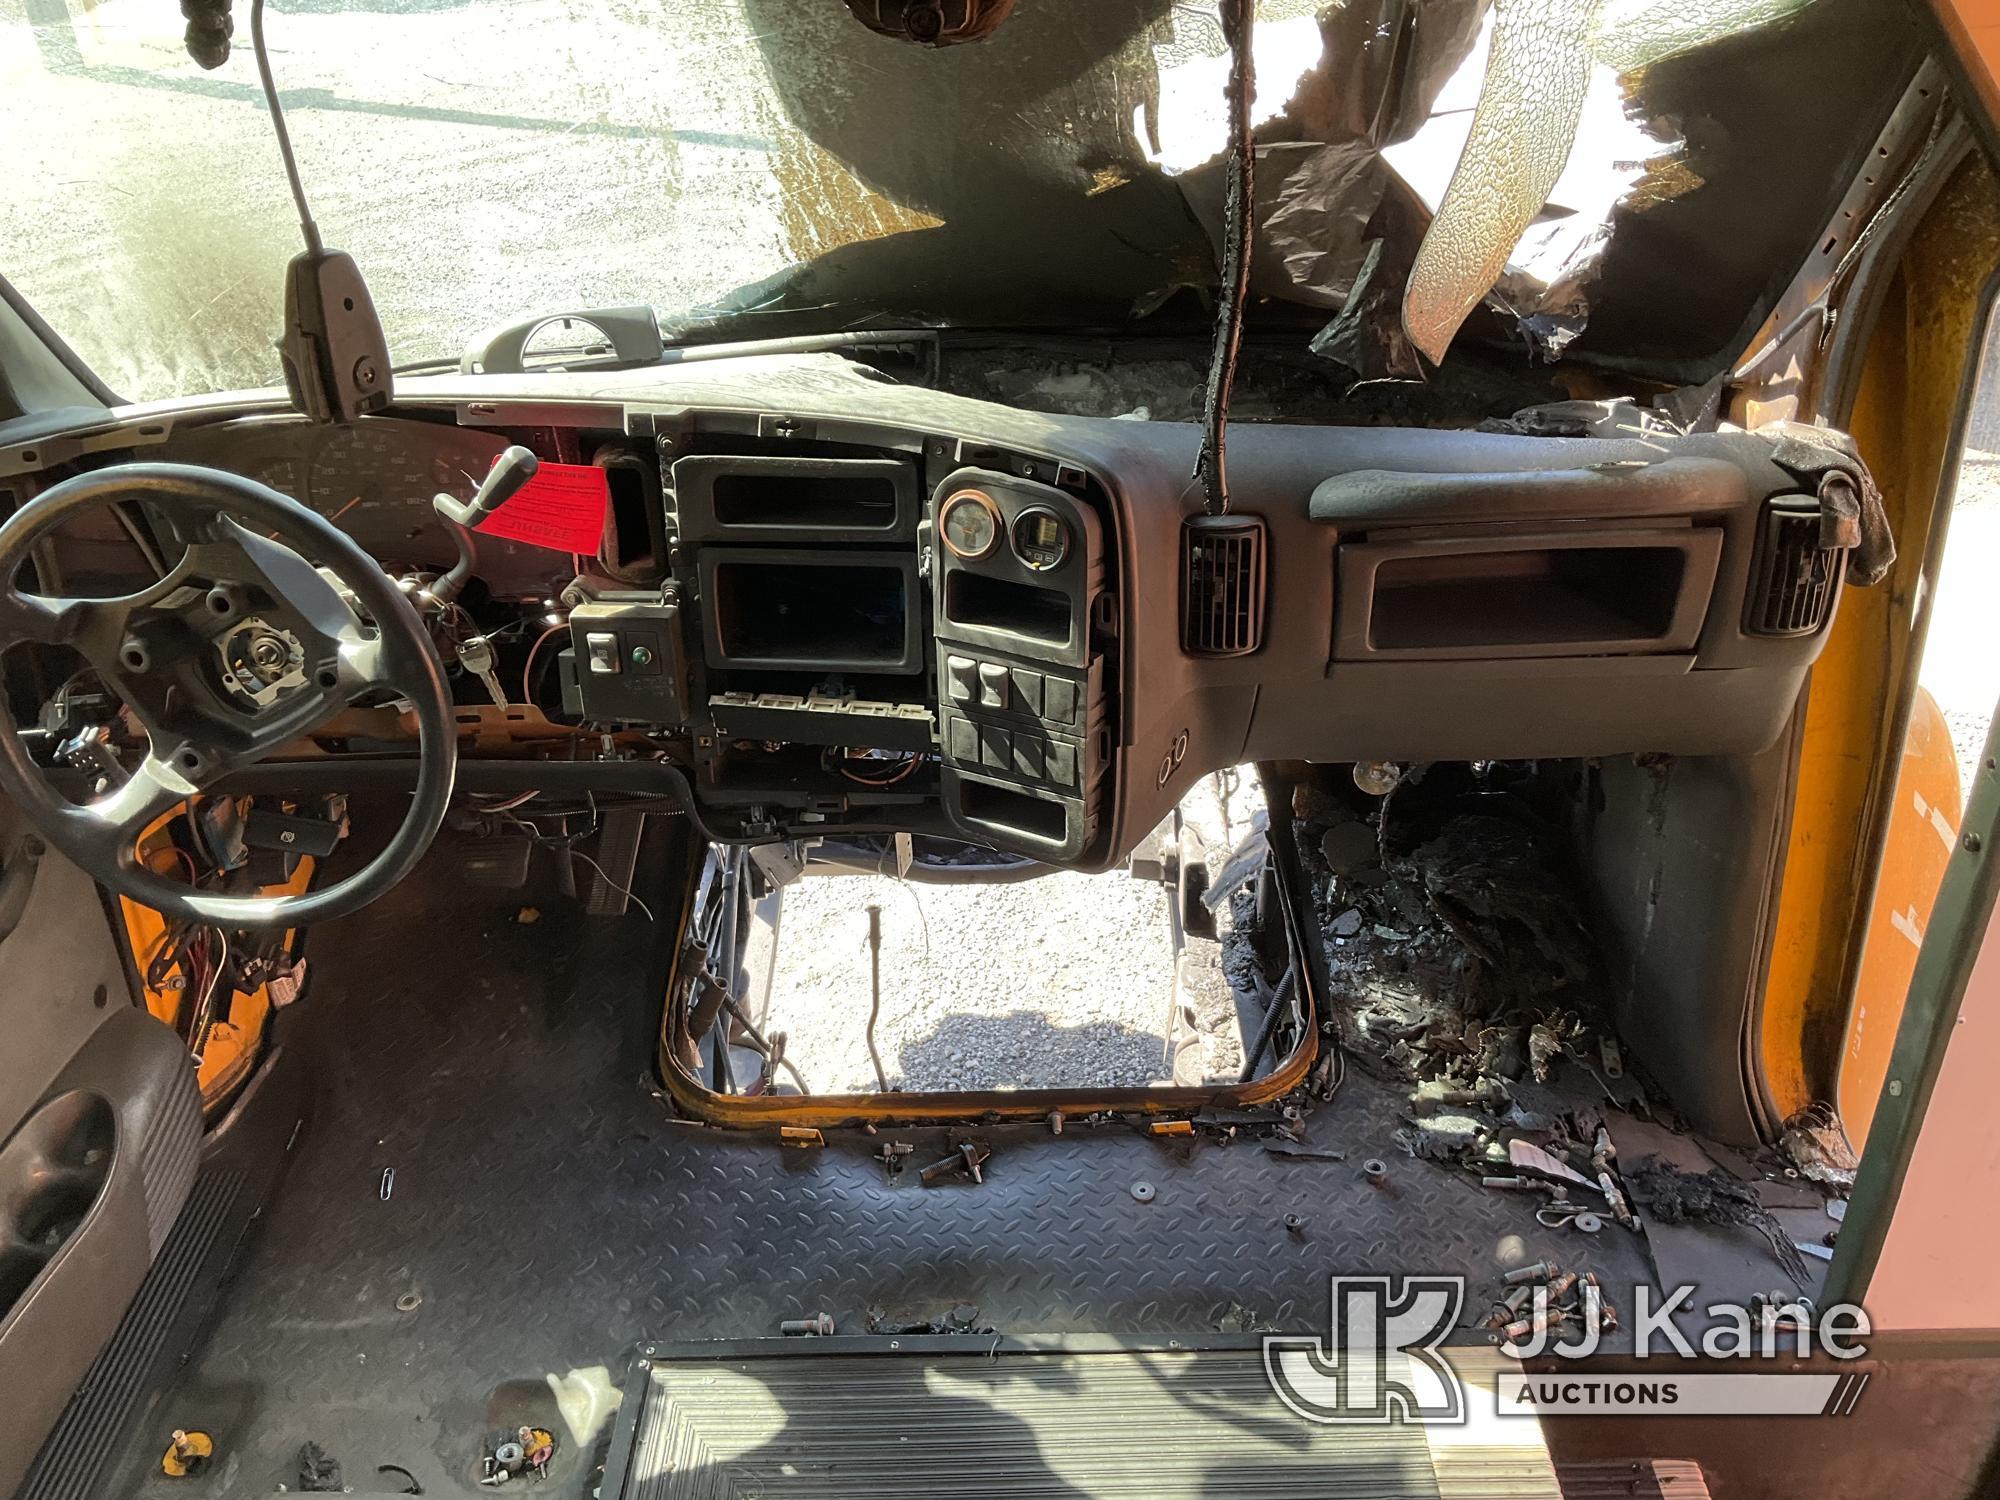 (Jurupa Valley, CA) 2009 Chevrolet C5V042 CUTAWAY Not Running, Fire Damage, Stripped of Parts